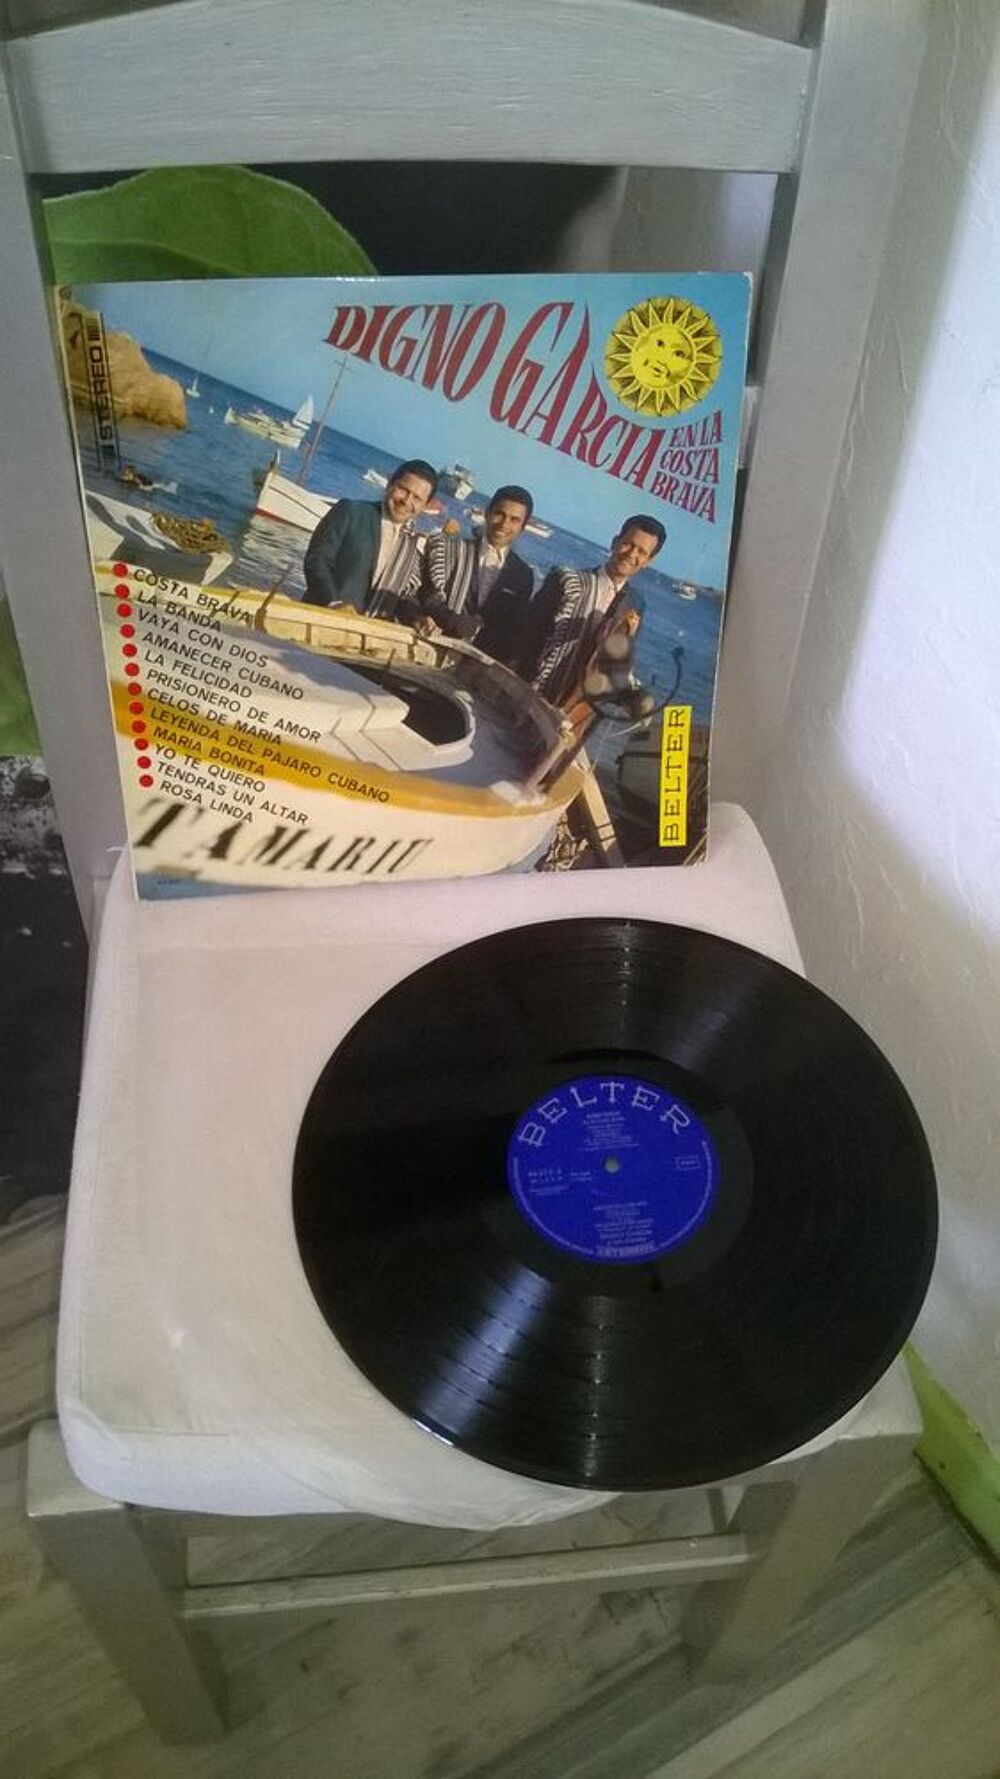 Vinyle Digno Garcia
En La Costa Brava
1968
Excellent etat CD et vinyles